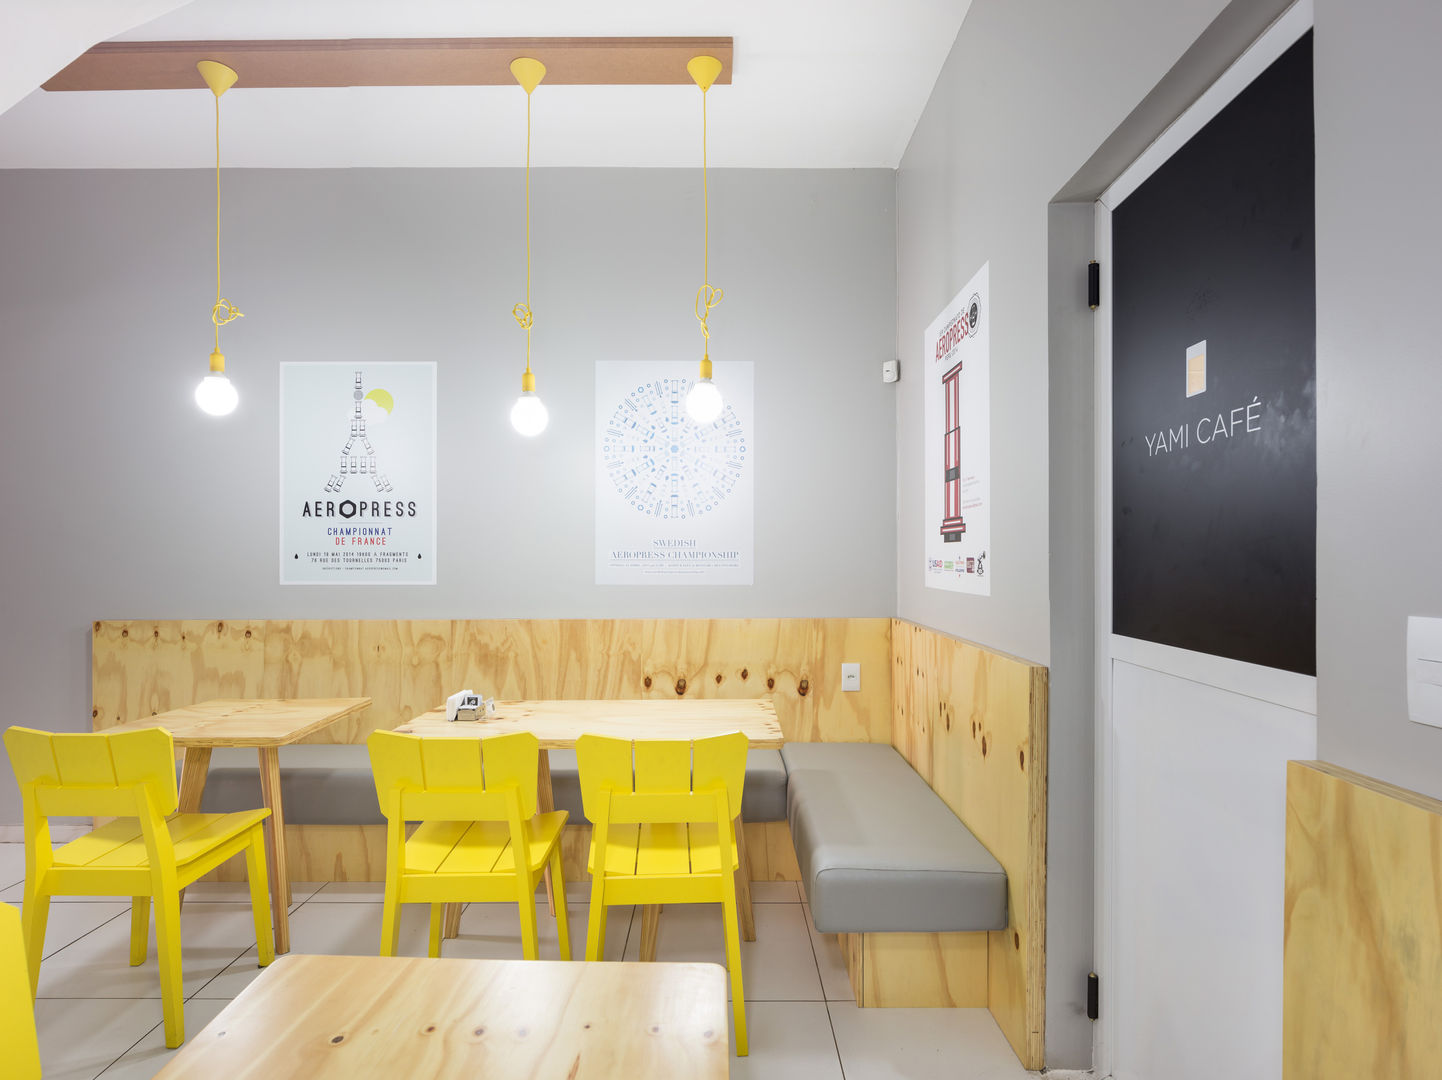 Restaurante - 2014 - Yami Café, Kali Arquitetura Kali Arquitetura 商业空间 餐廳